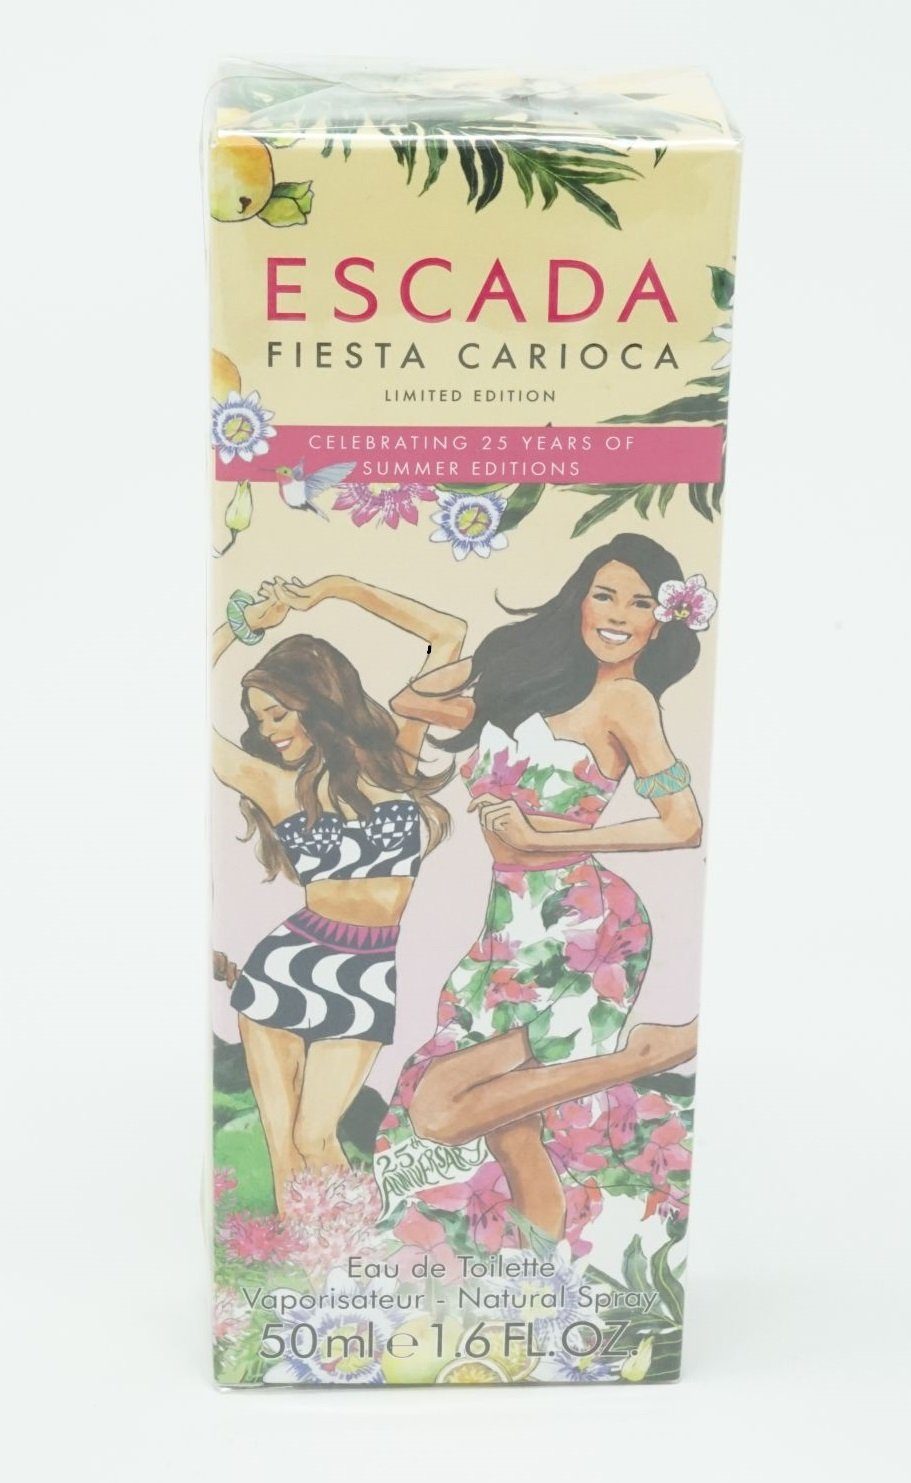 ESCADA Eau de Toilette Escada Fiesta Carioca Limited Edition Eau de Toilette Spray 50ml